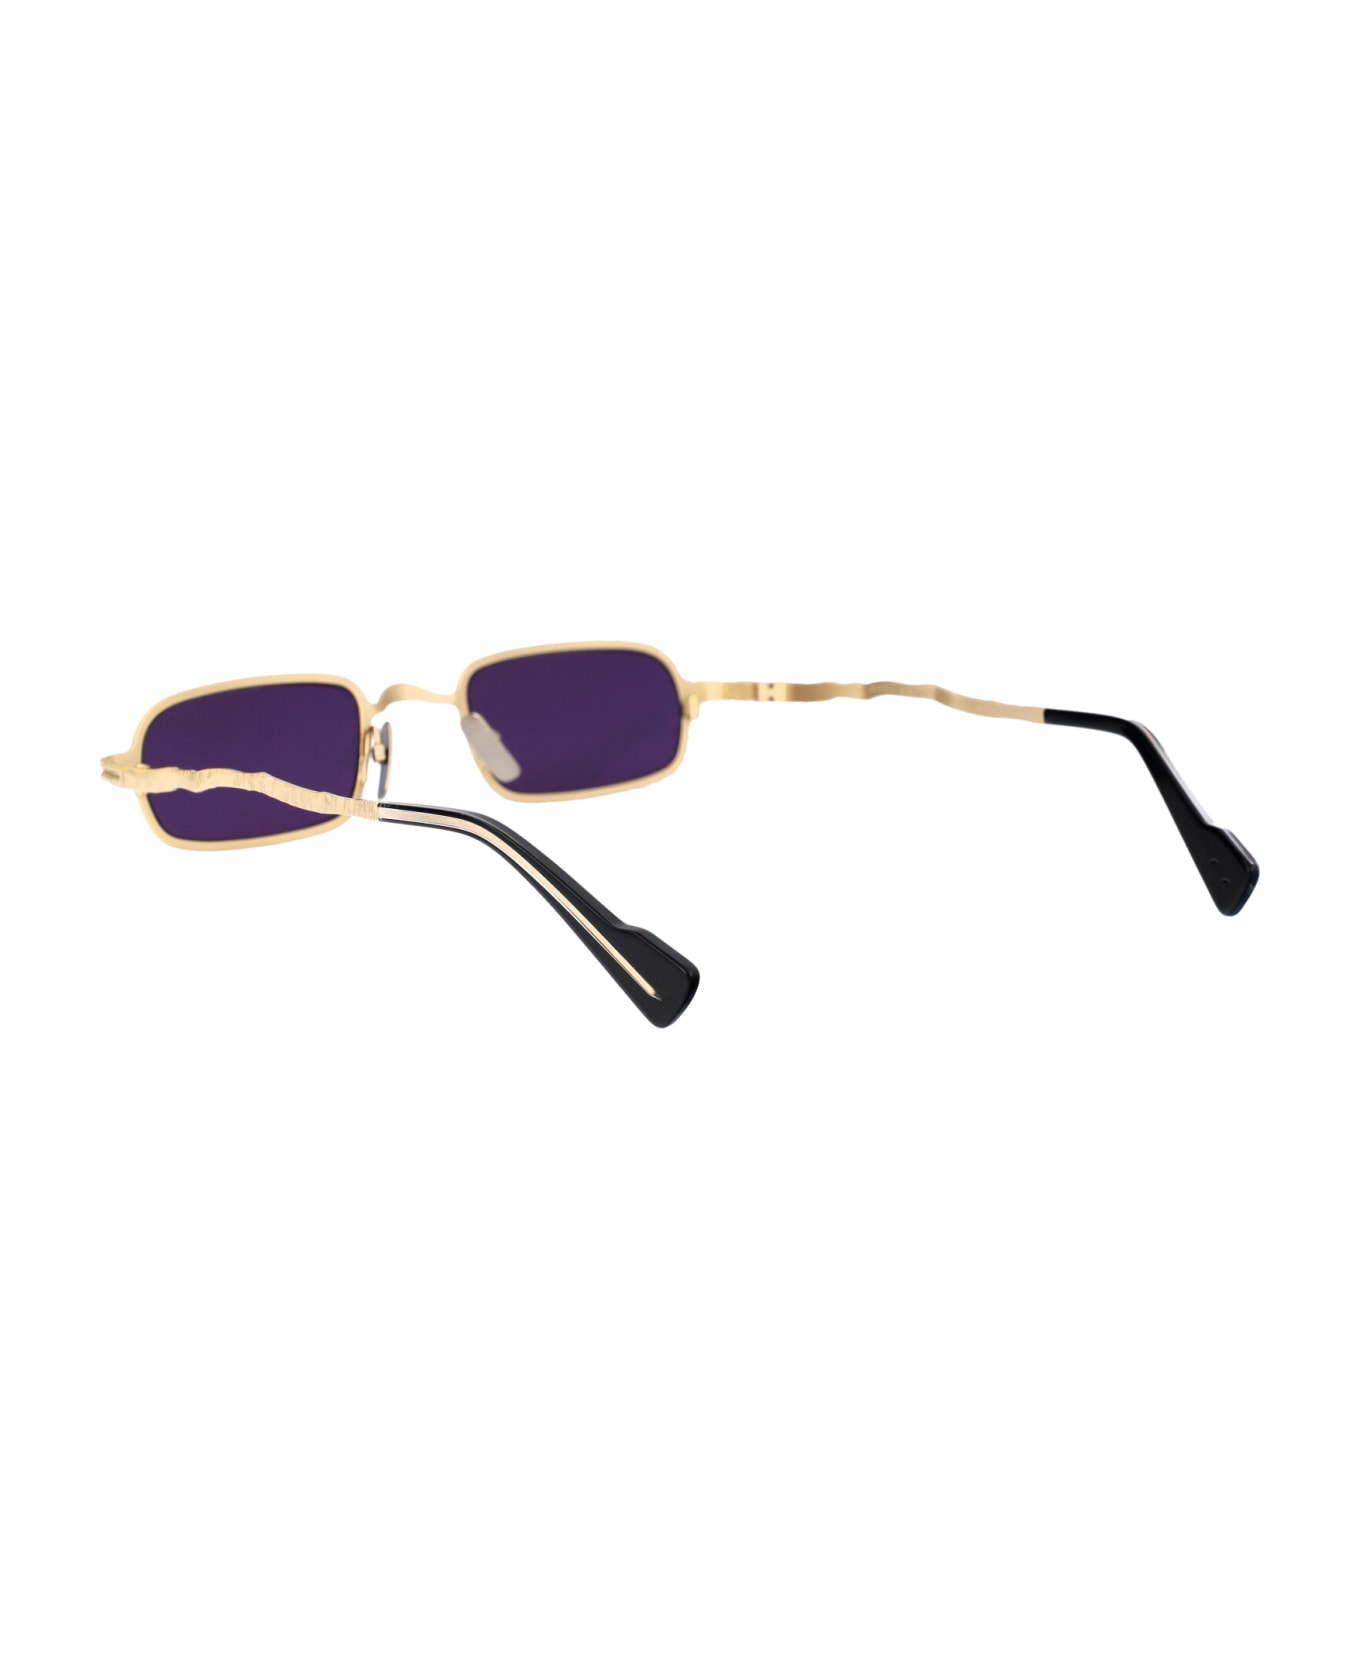 Kuboraum Maske Z18 Sunglasses - GG violet